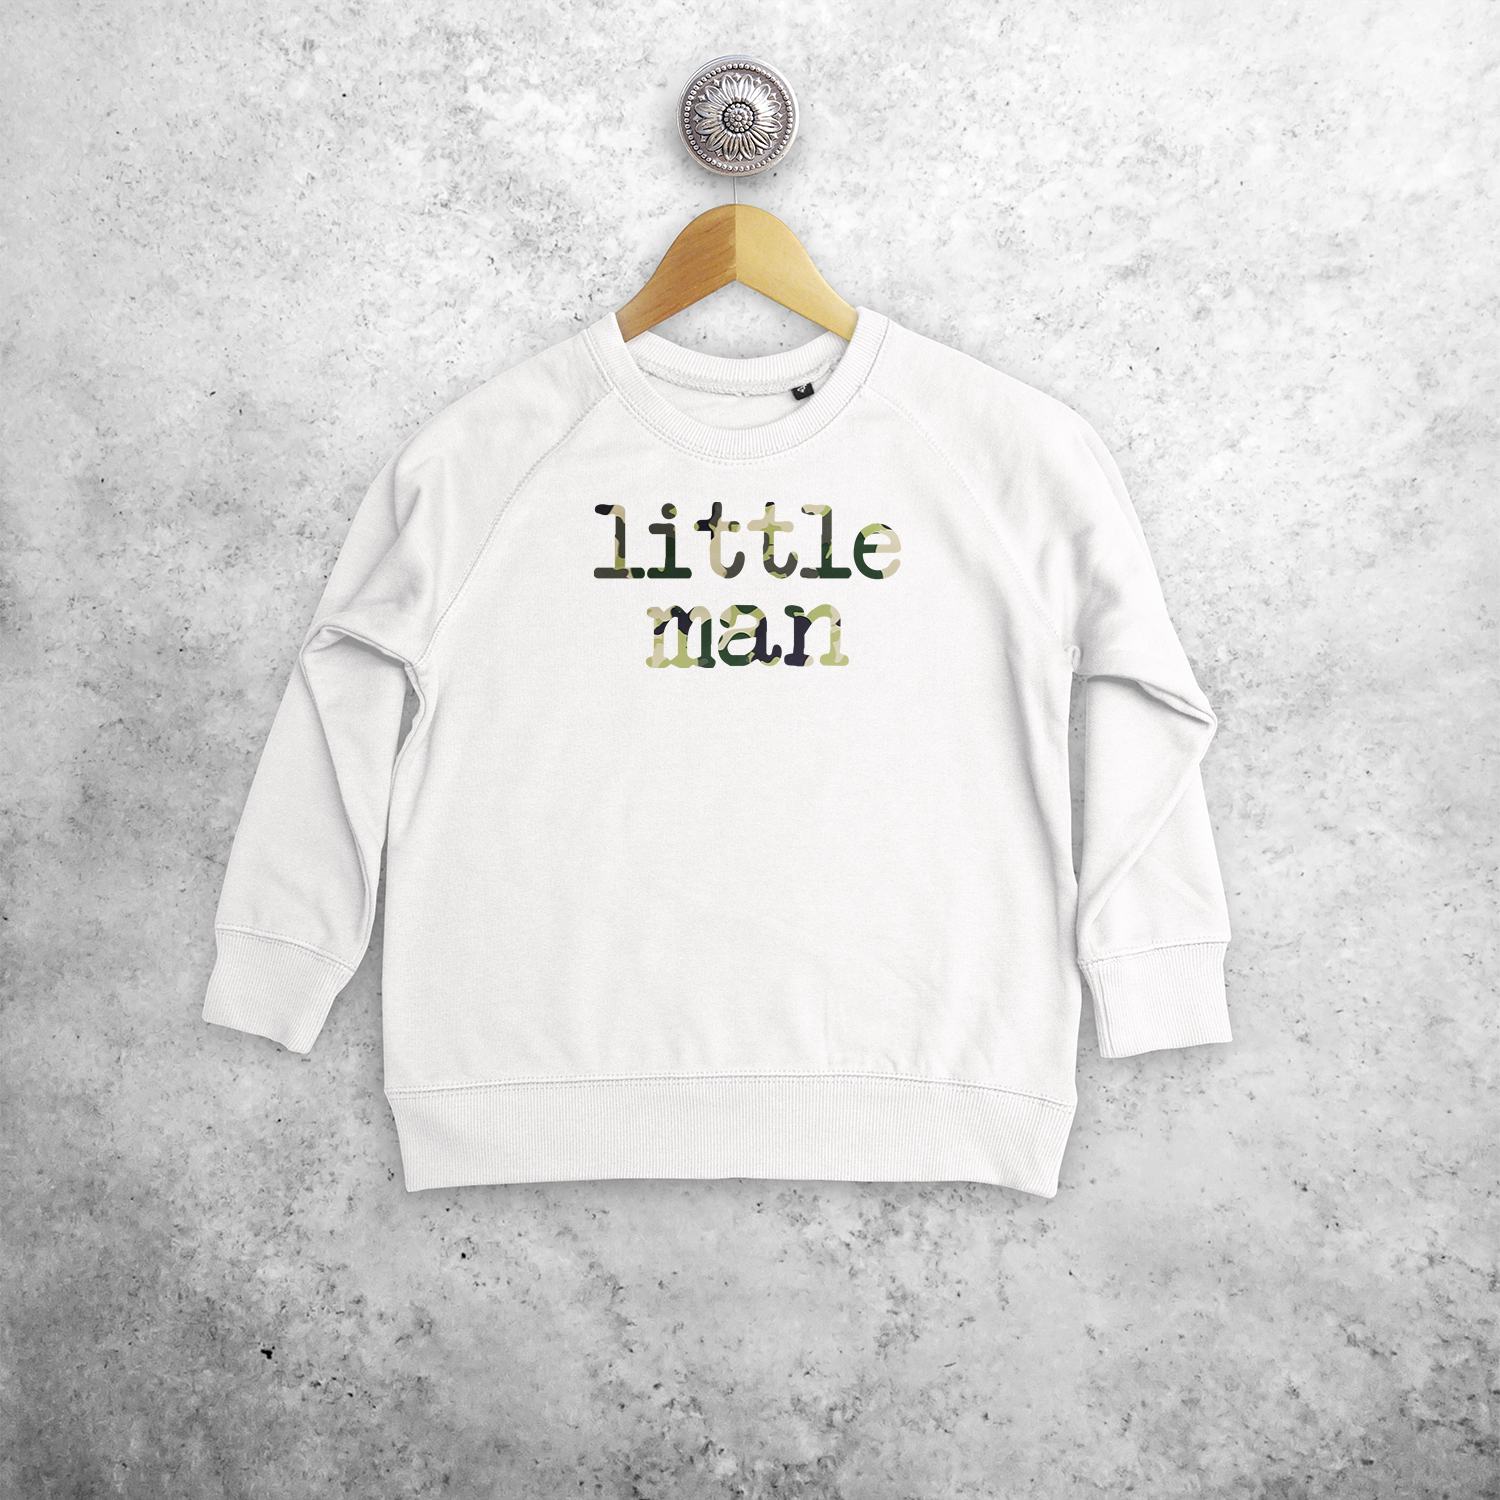 'Little man' kids sweater